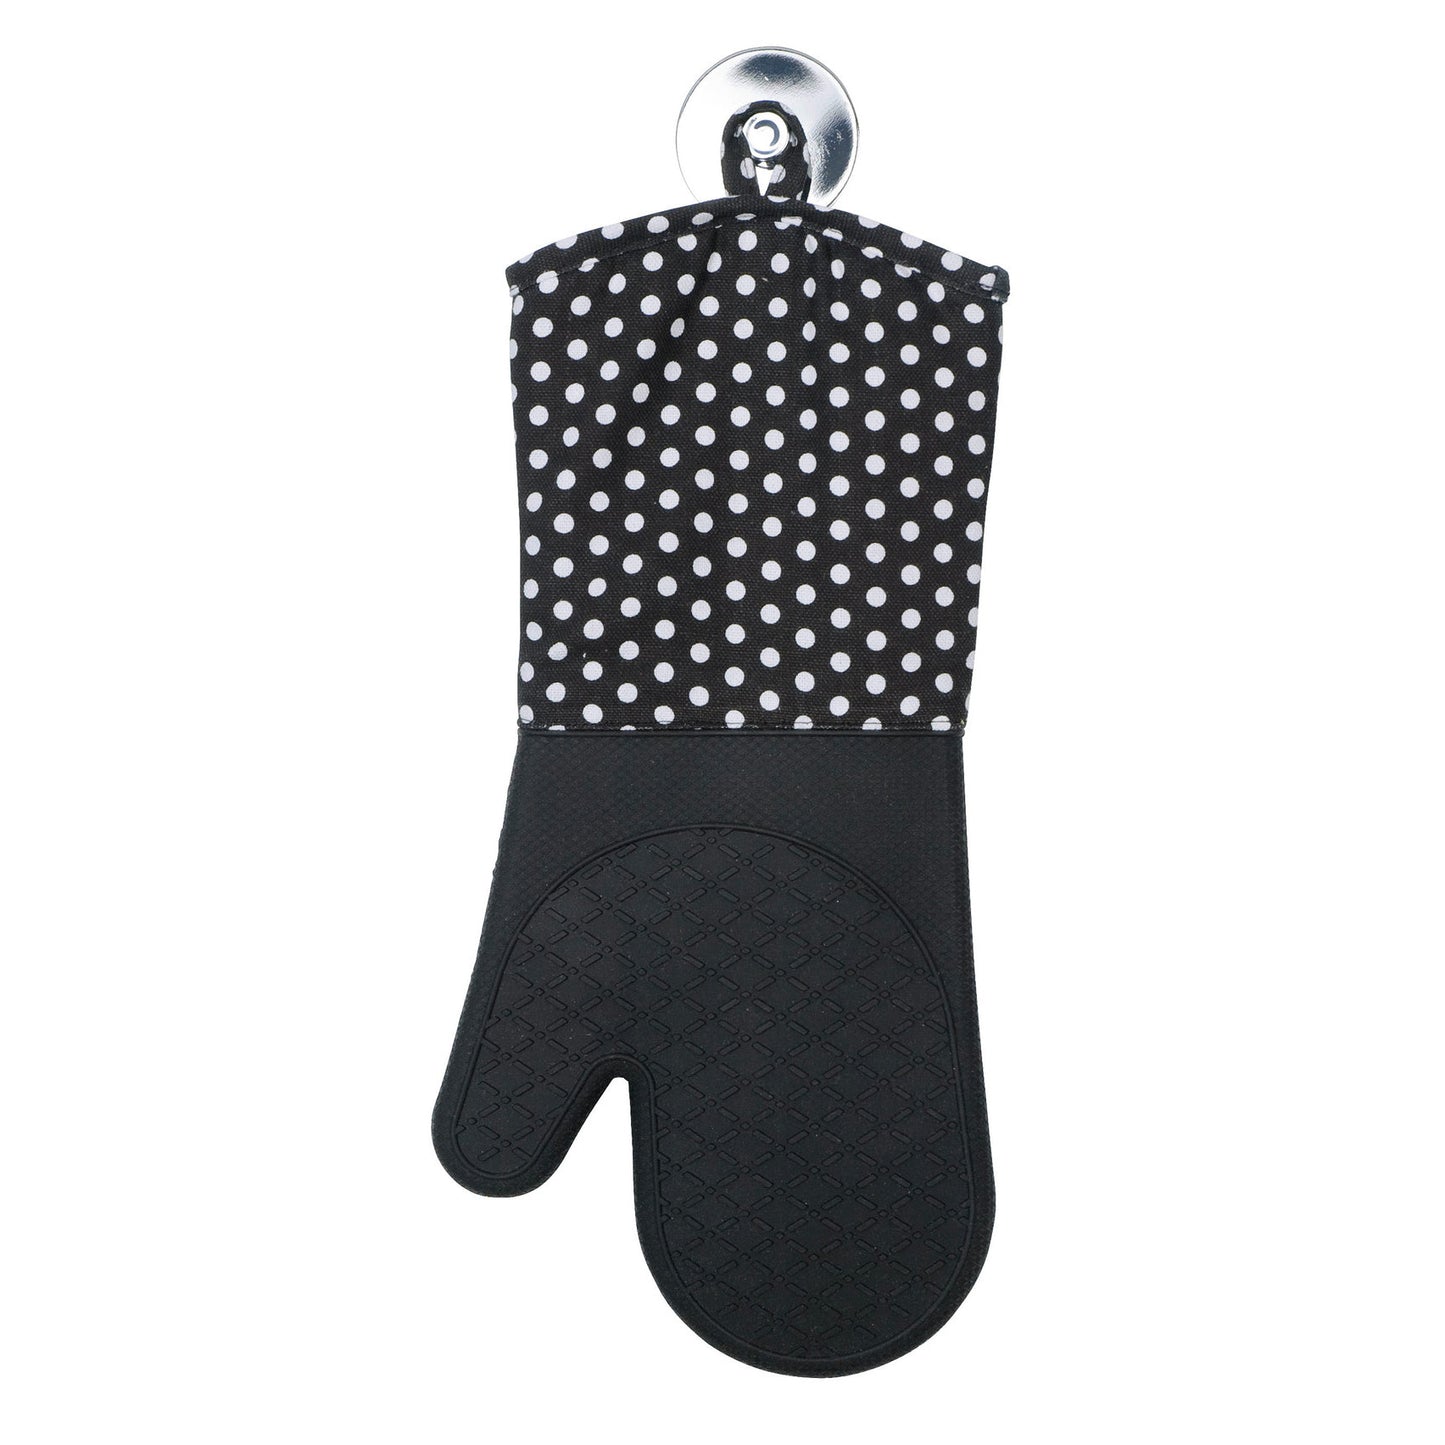 Oven Gloves Silicone 2 Pcs - Black W/ White Dots